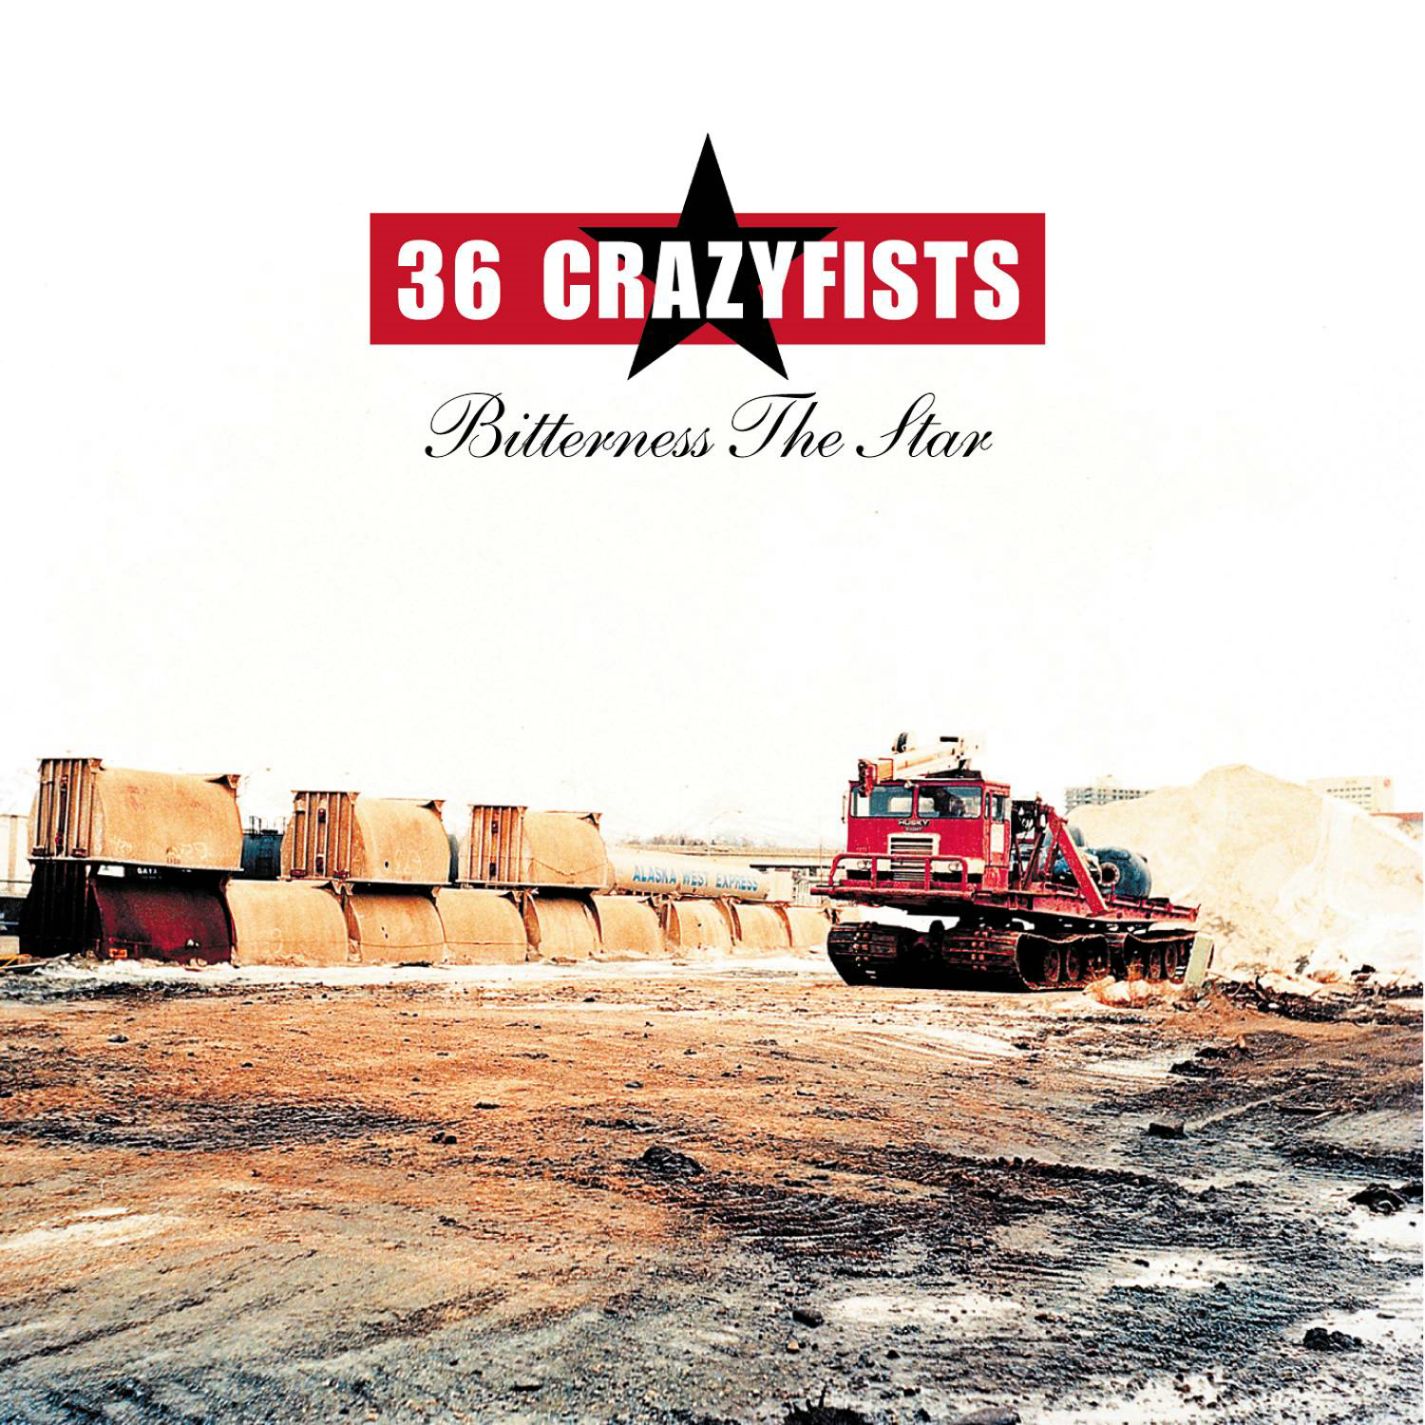 36 Crazyfists   Bitterness The Star   2002